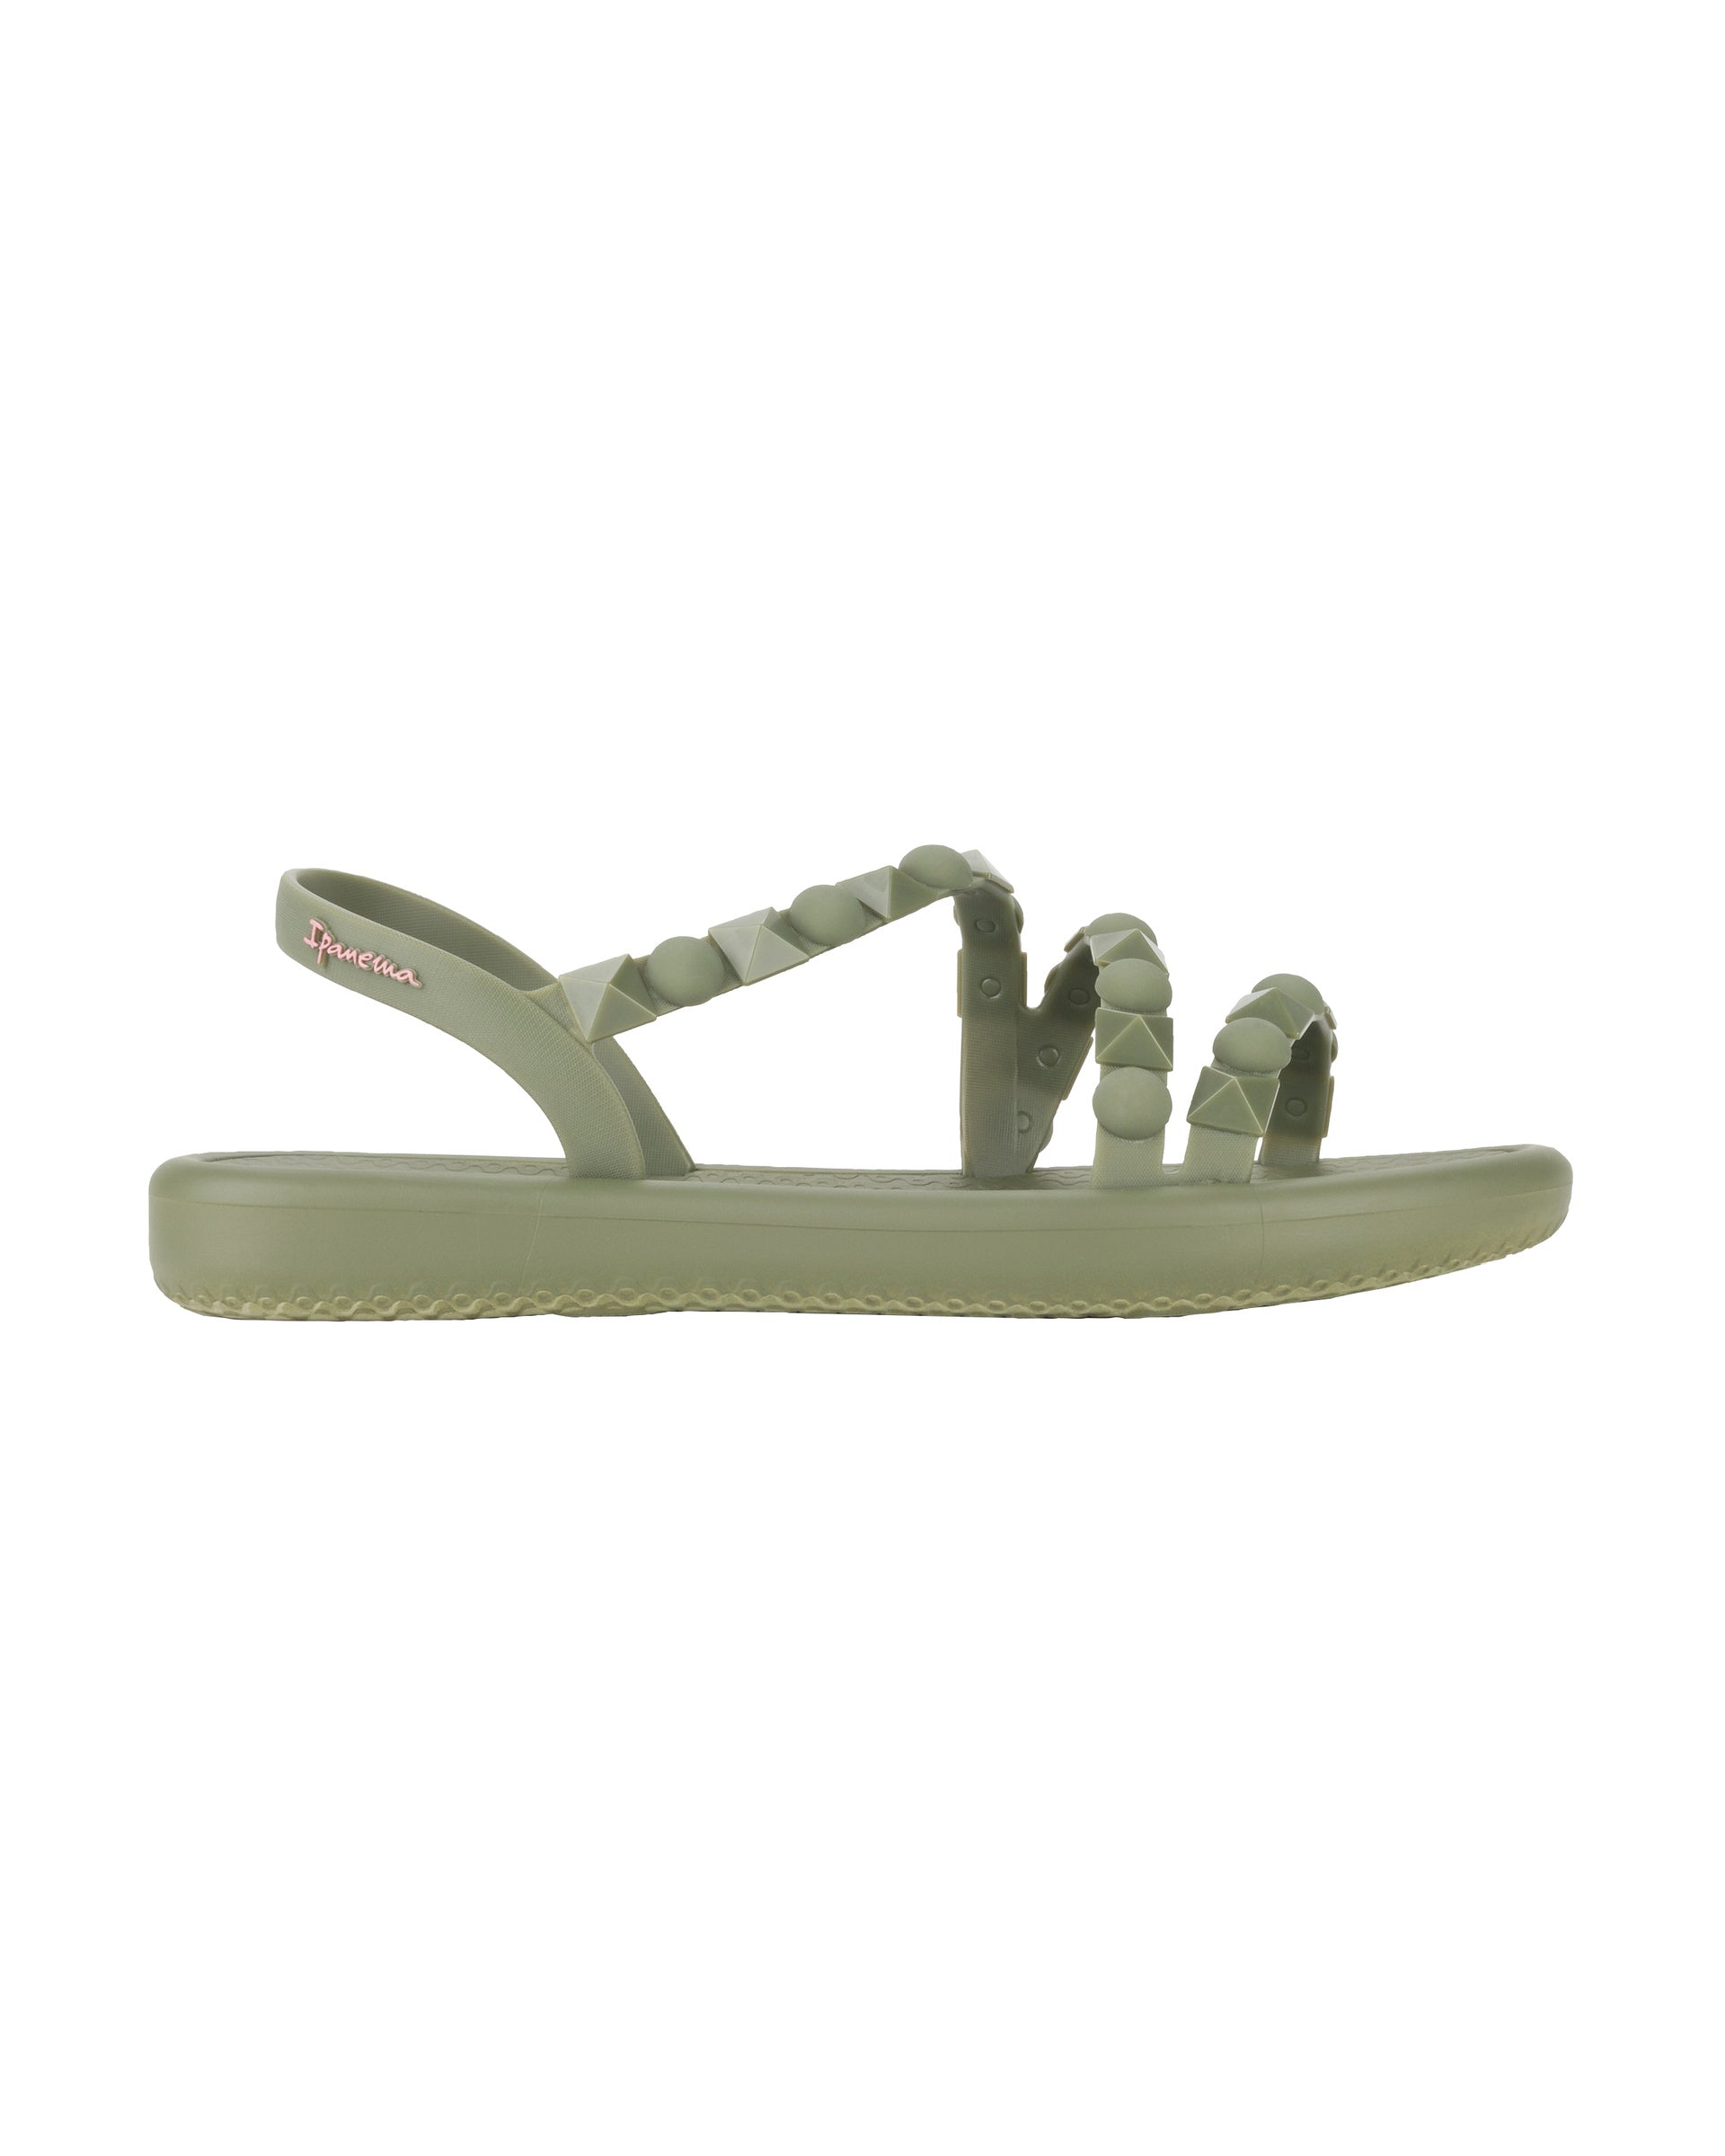 Side view of a green woman's Ipanema Meu Sol flatform sandal.